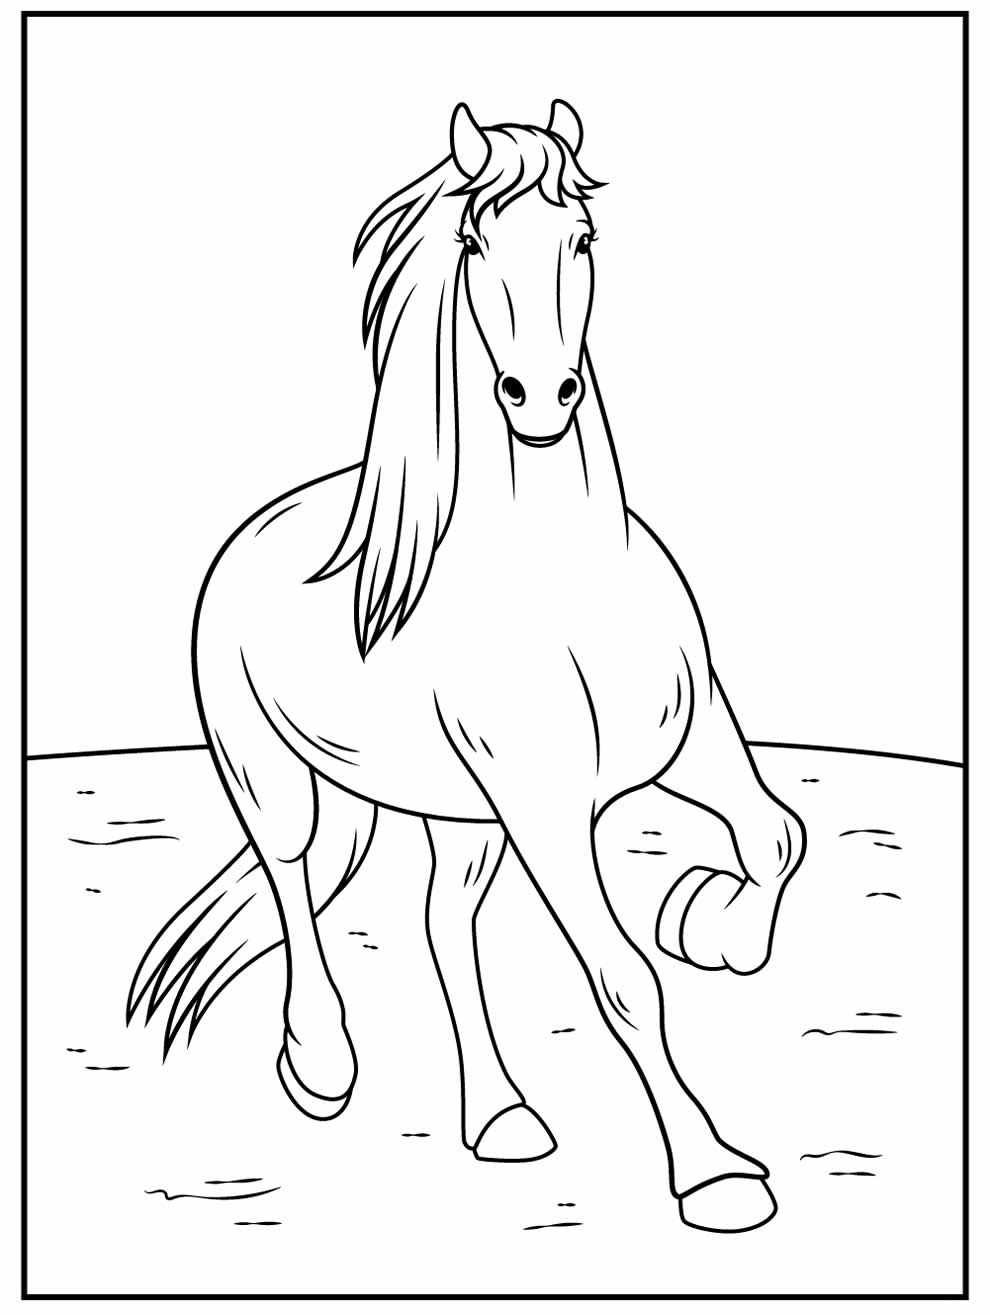 Desenho para pintar e colorir de Cavalo